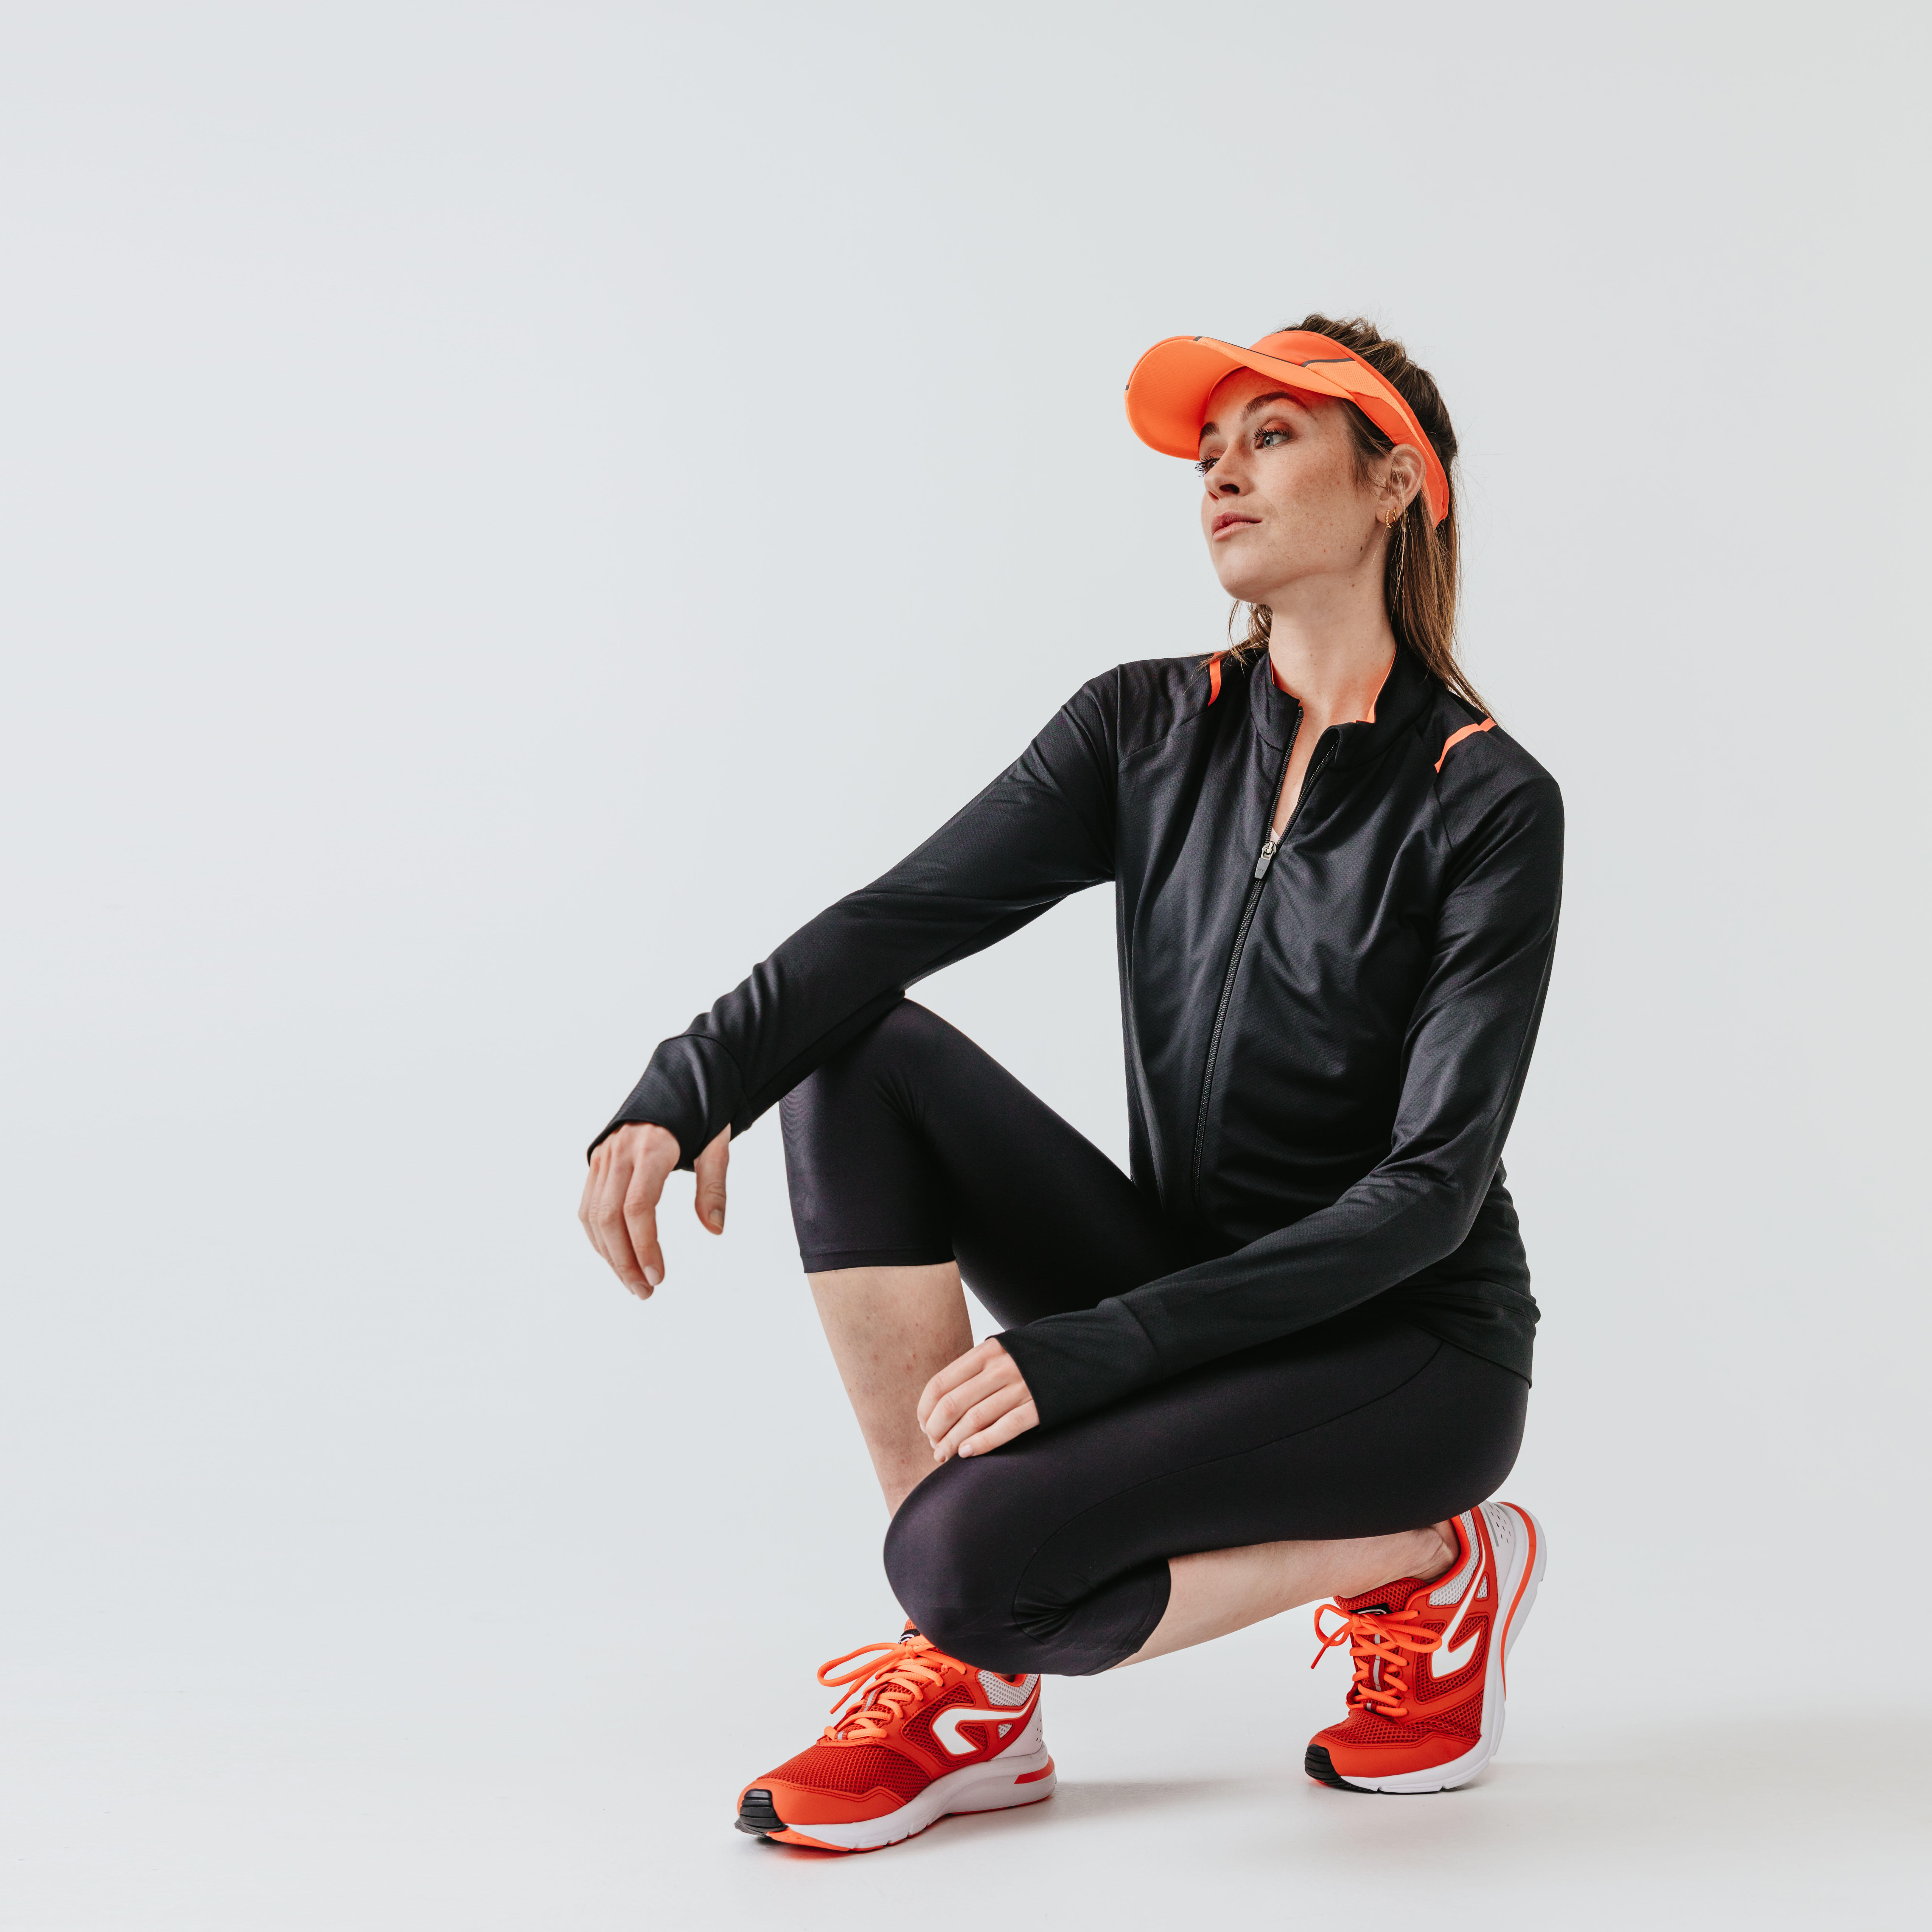 Women's Running Tights - Warm Black